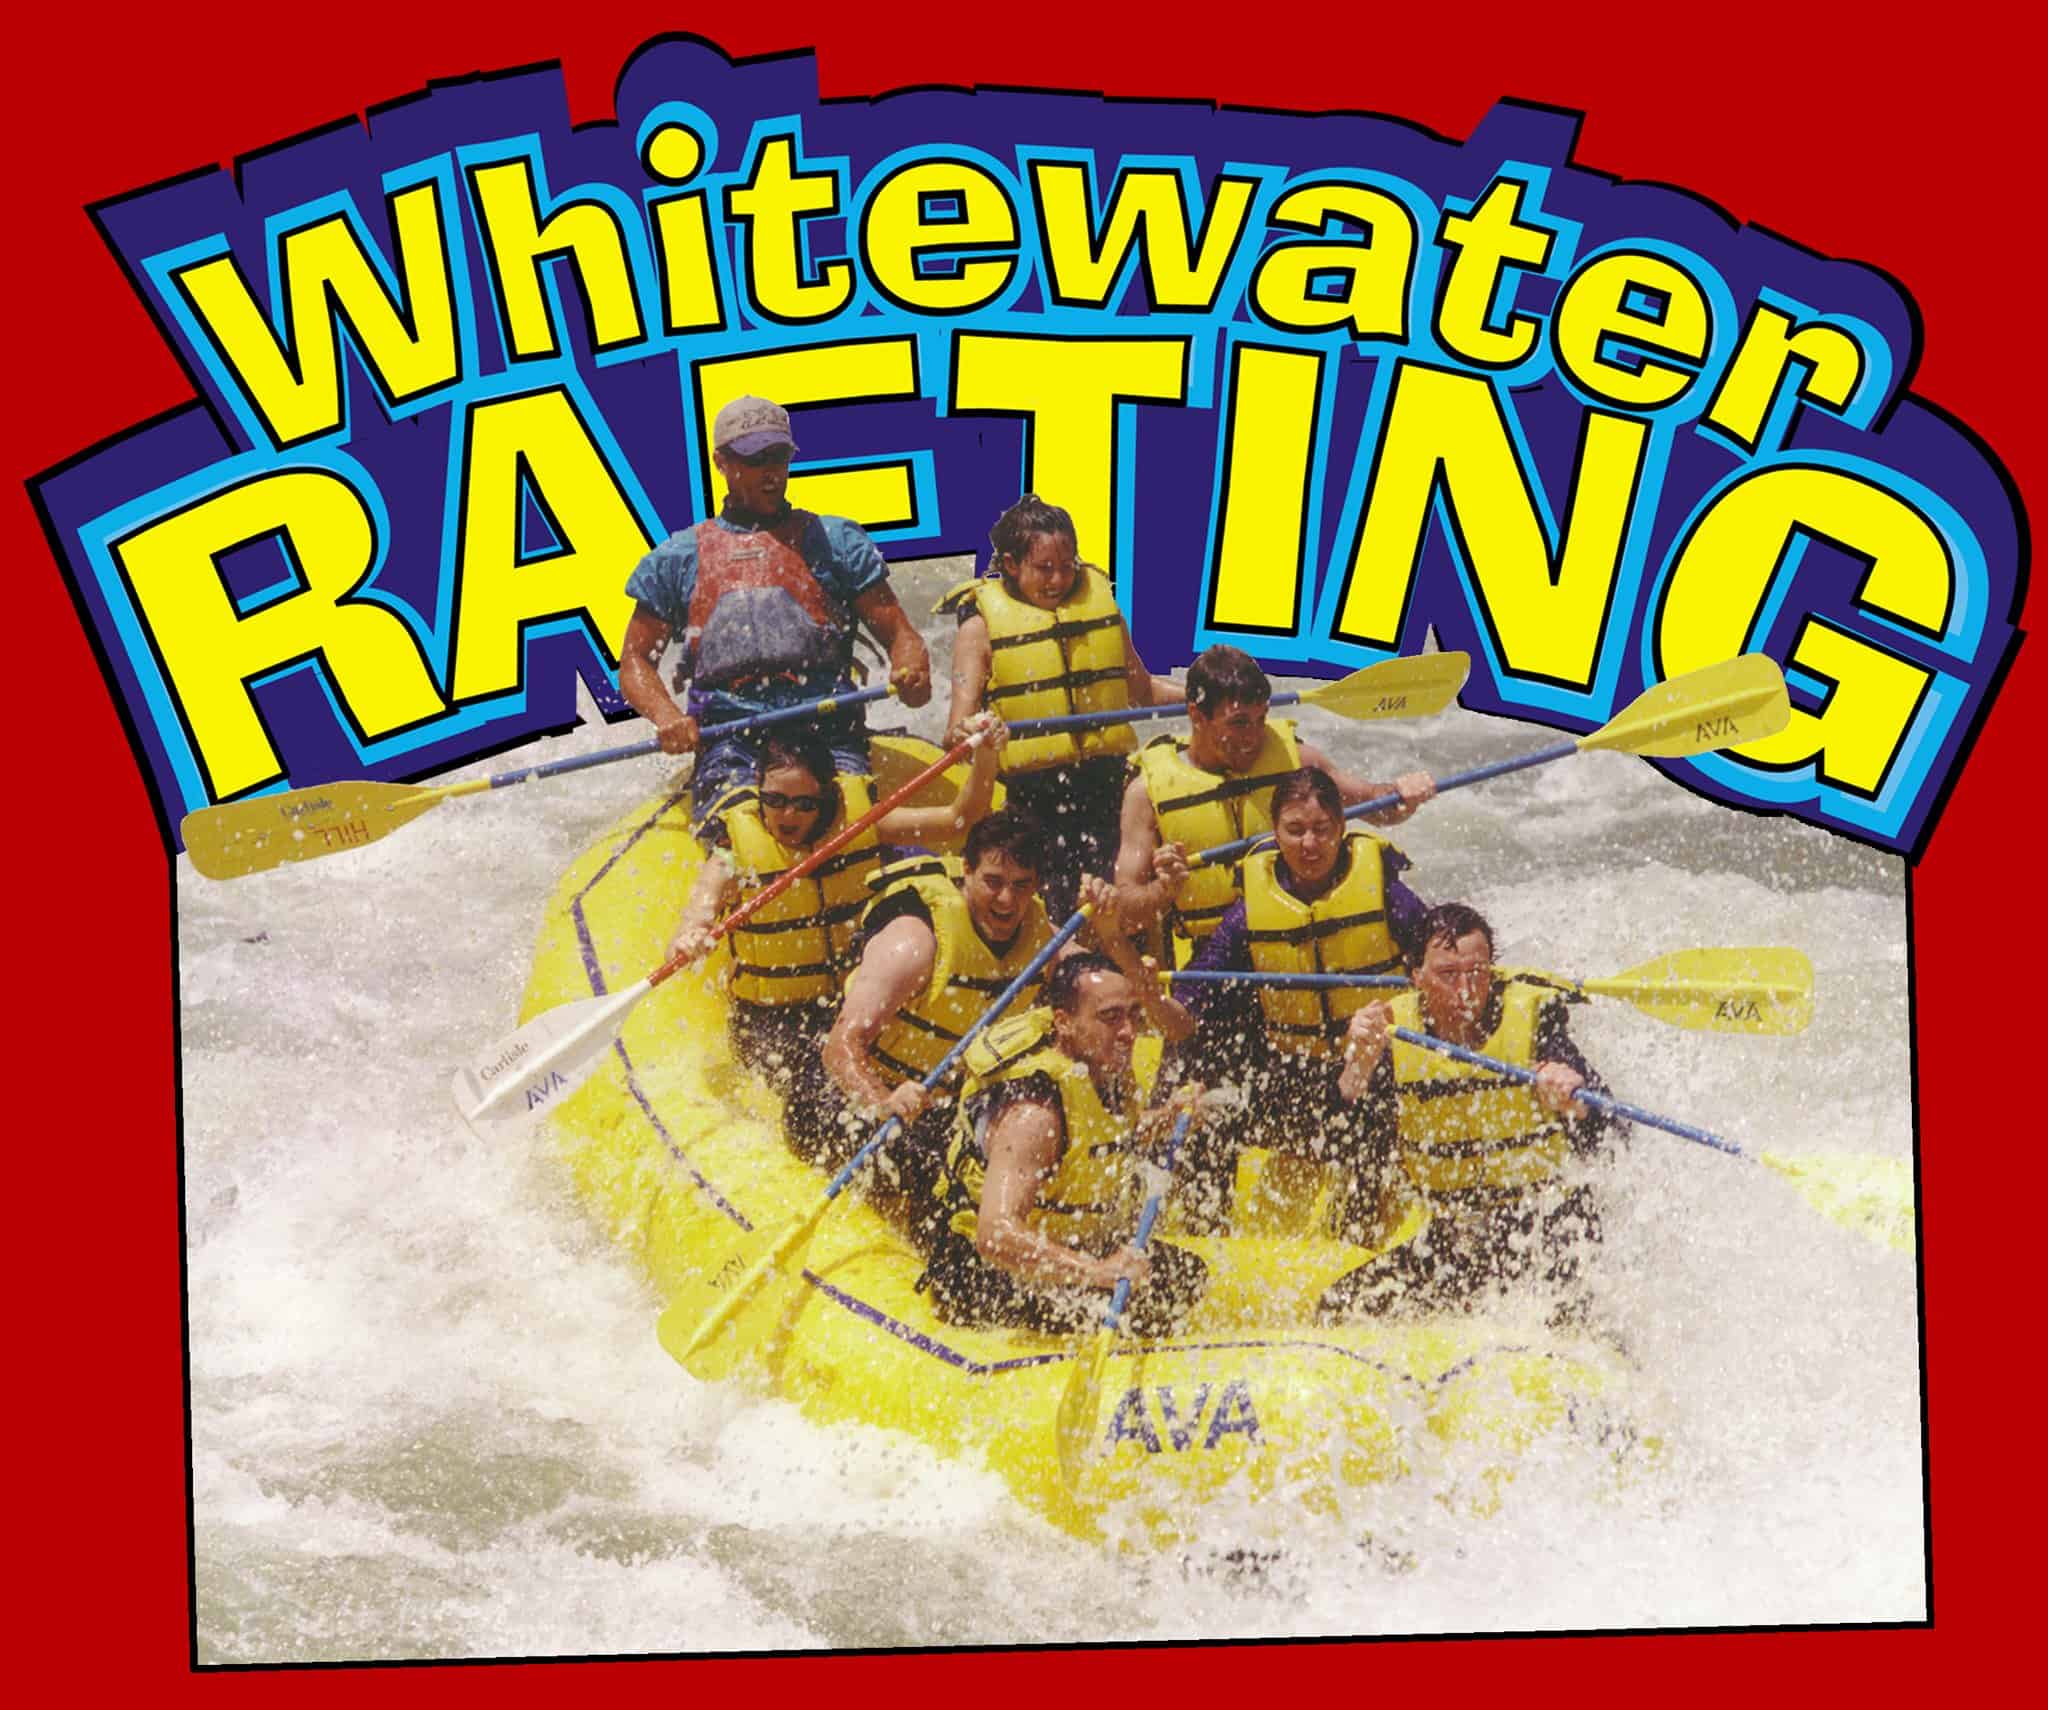 Whitewater Rafting graphic